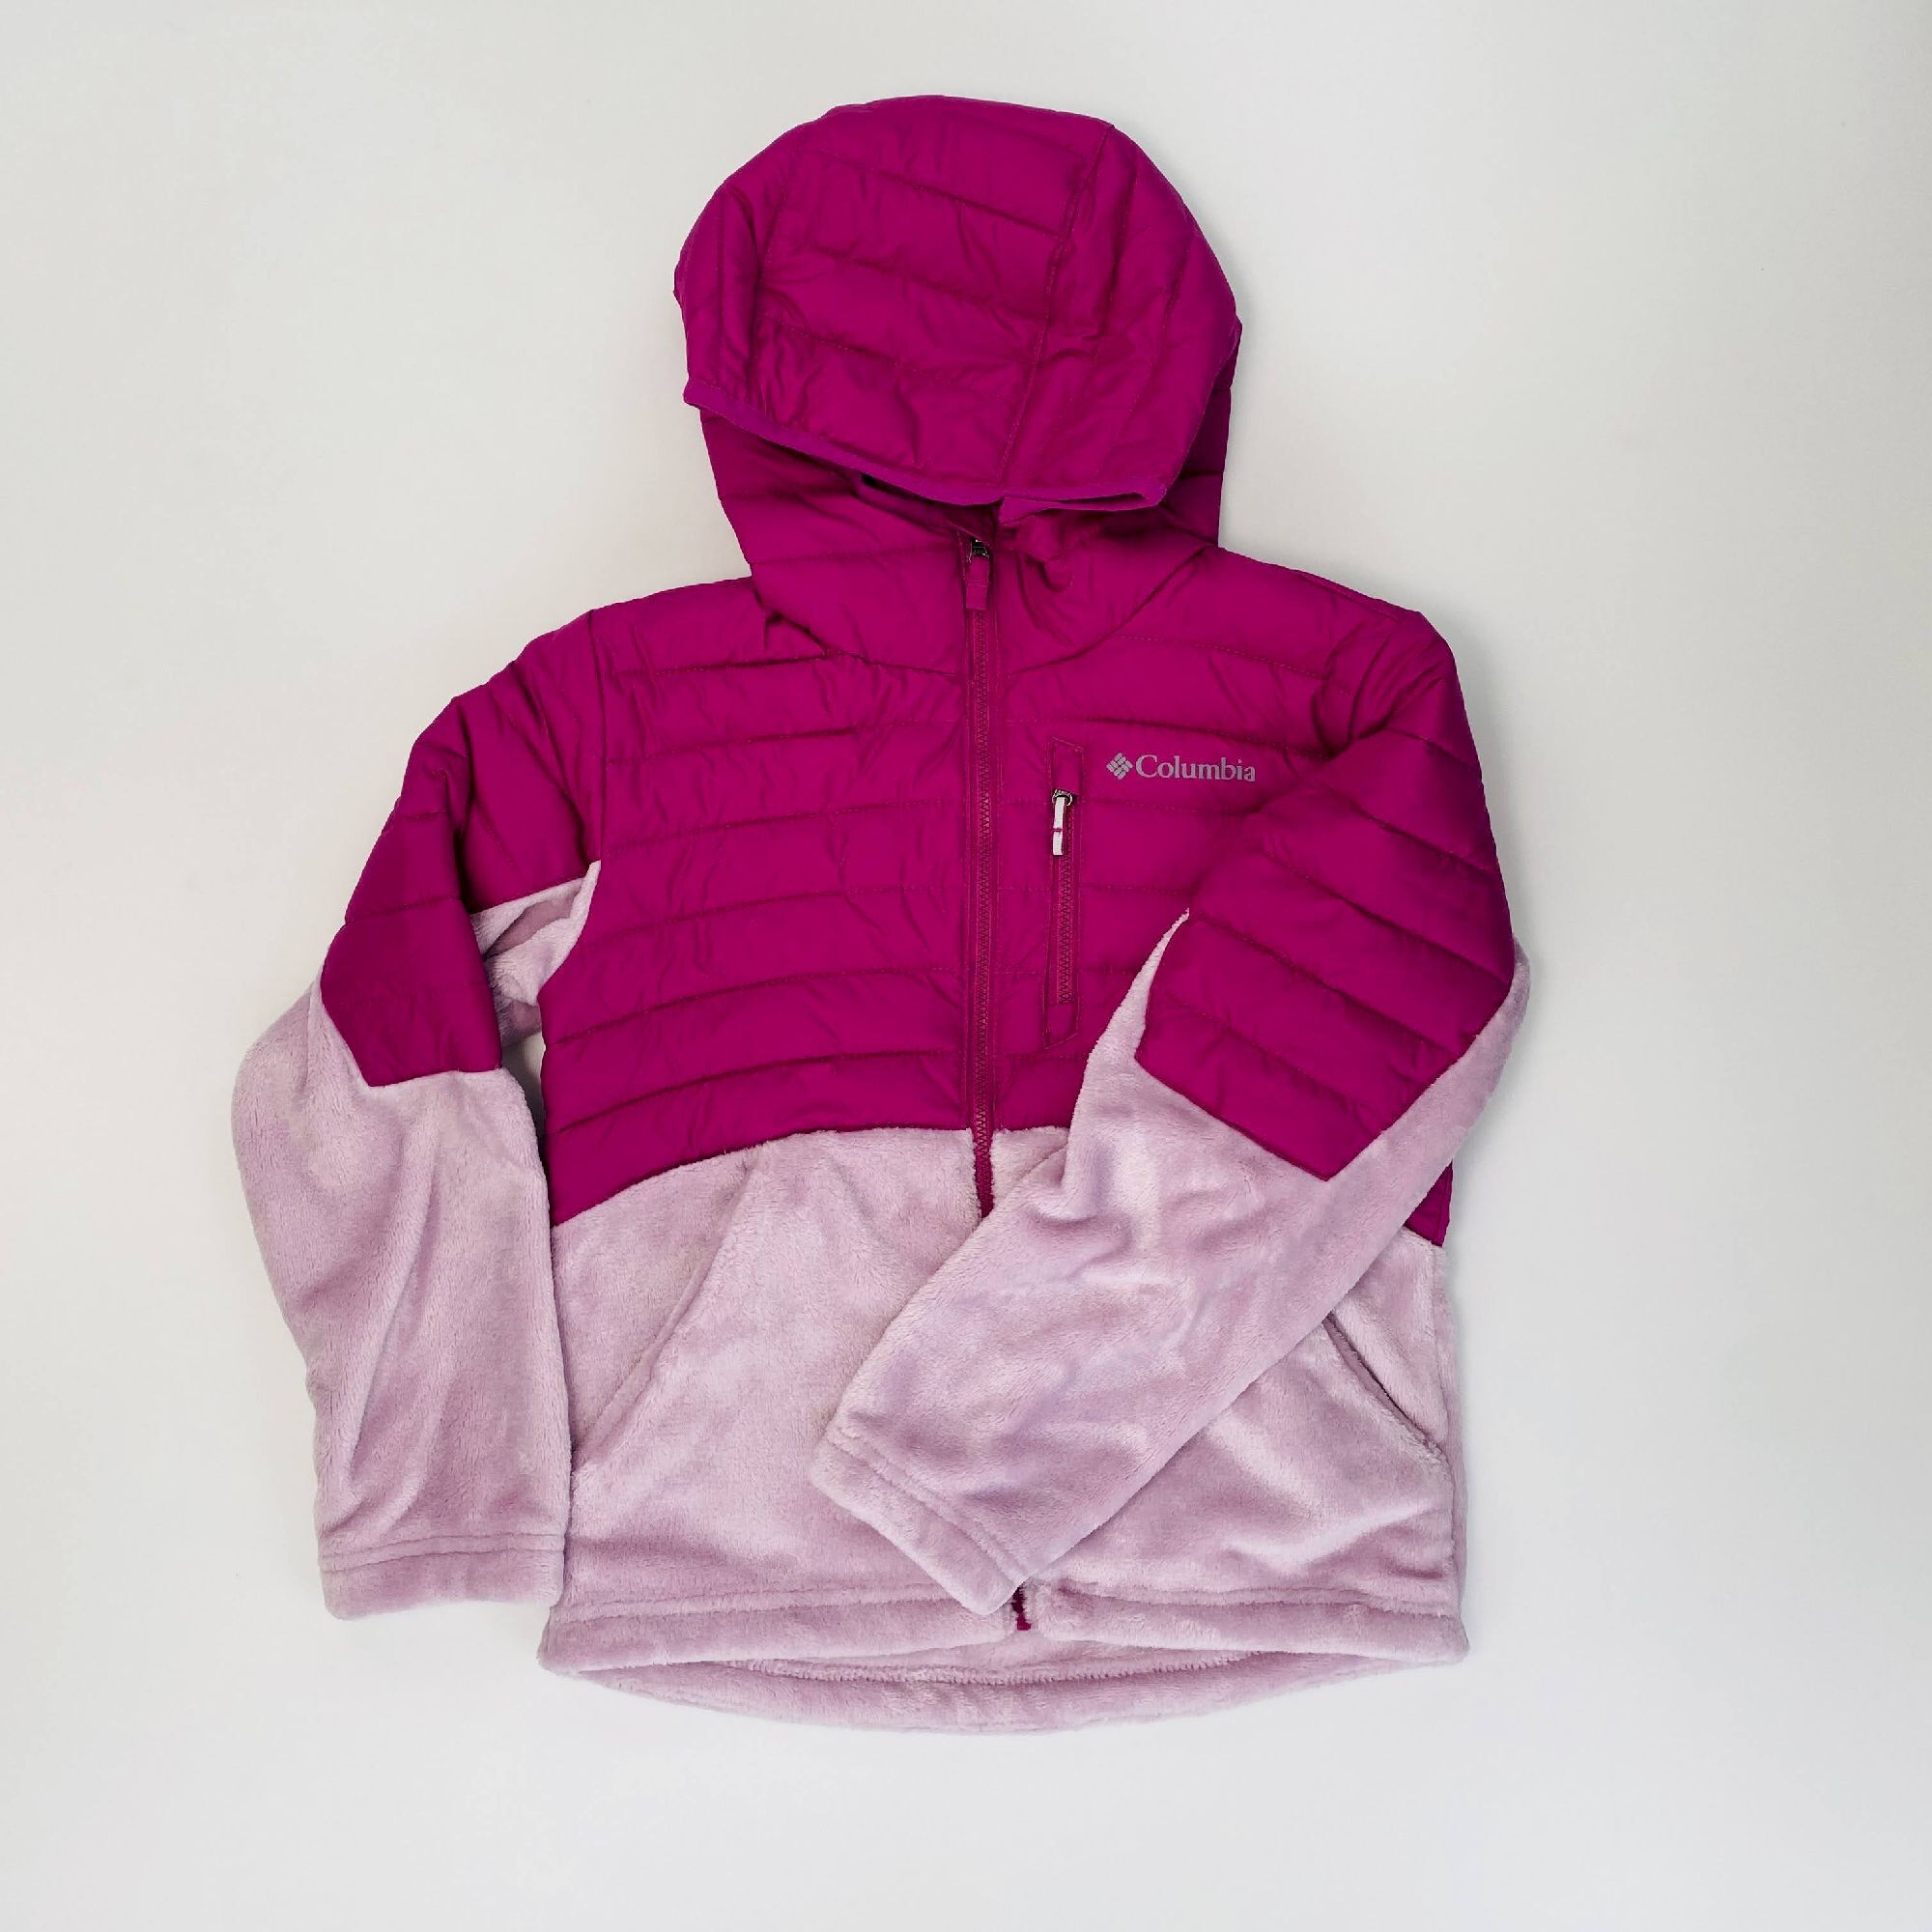 Columbia Powder Lite™ Girls Novelty Hooded Jacket - Giacca sintetica di seconda mano - Bambino - Rosa - S | Hardloop